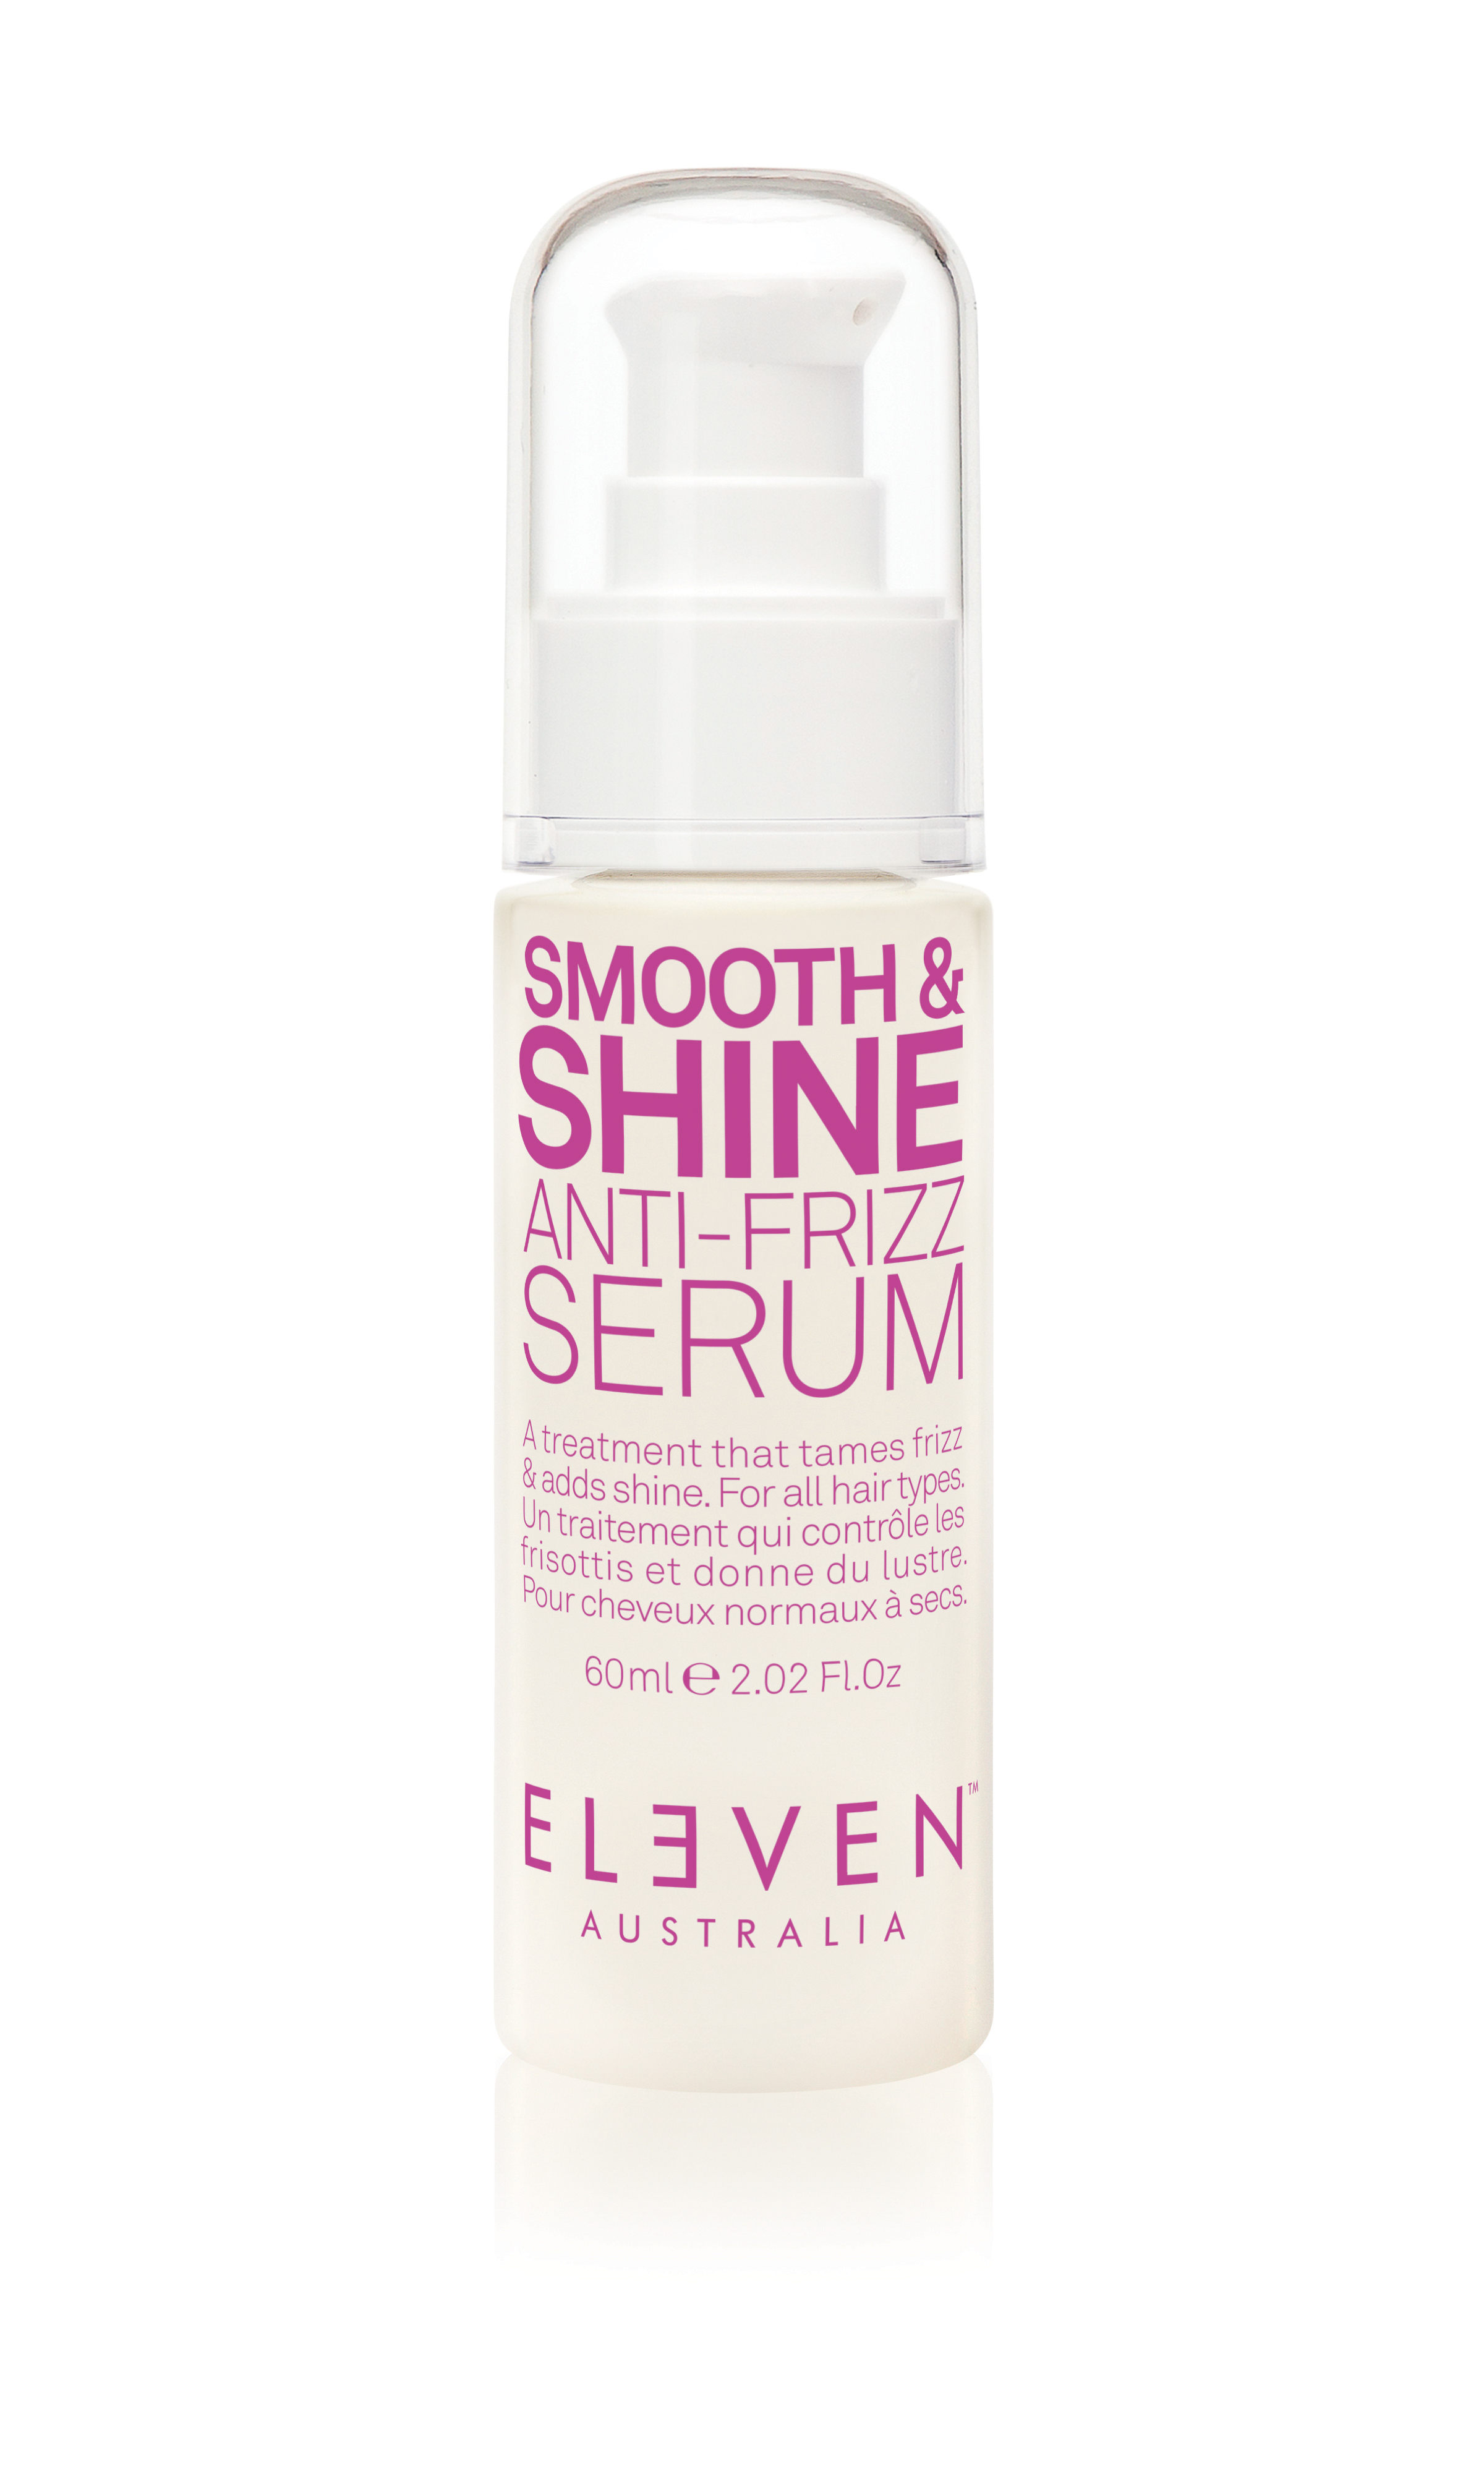 ELEVEN smooth & shine anti frizz serum